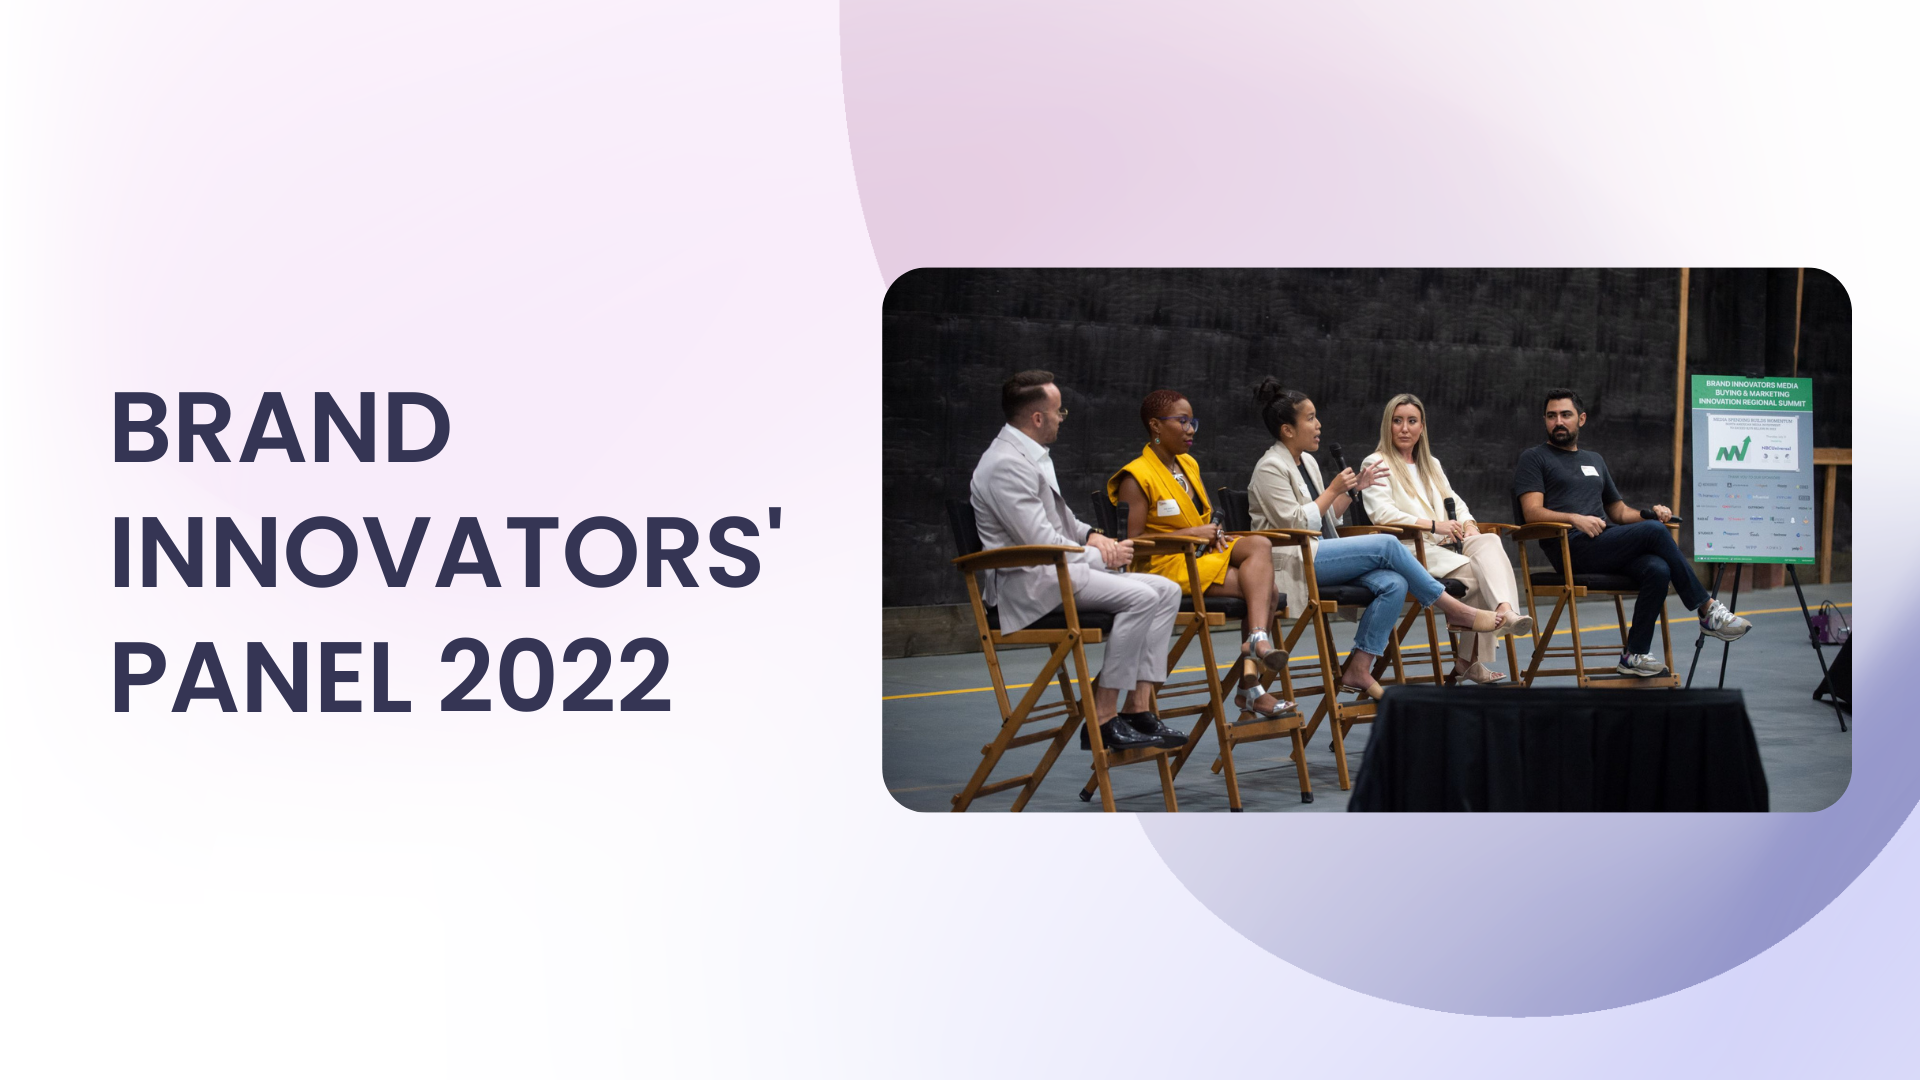 Brand Innovators' Panel 2022